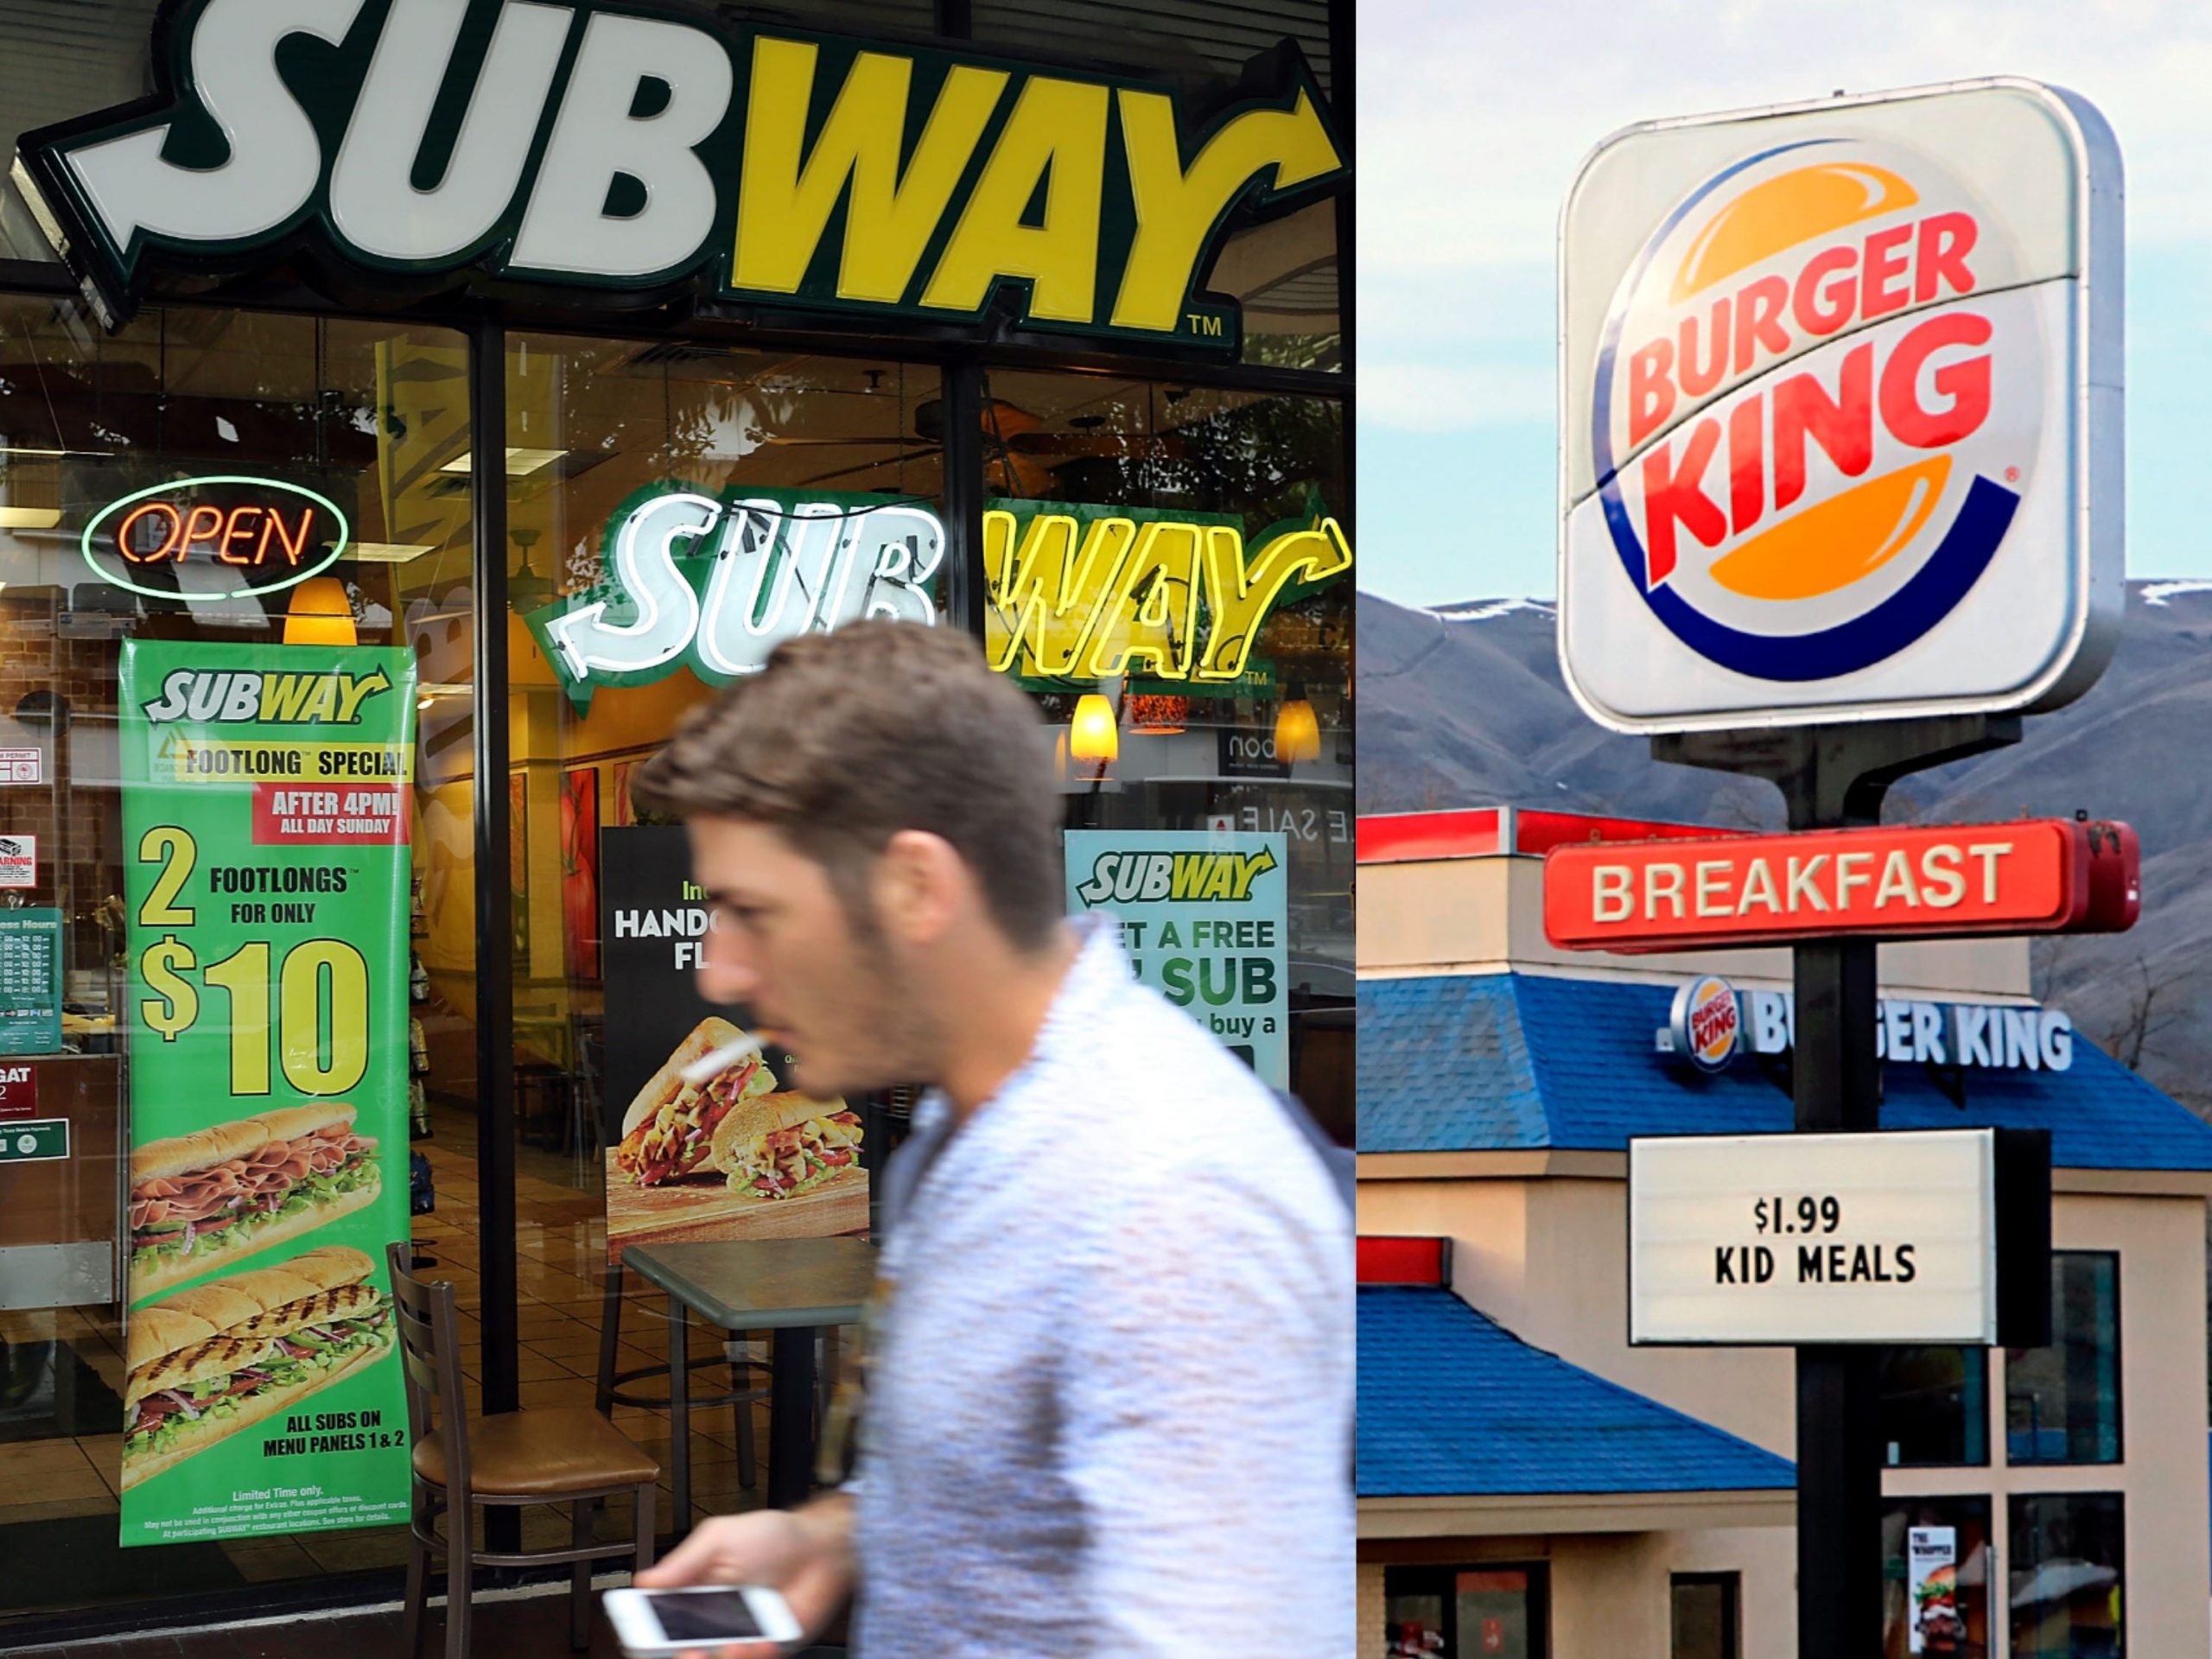 Subway Burger King logos restaurants